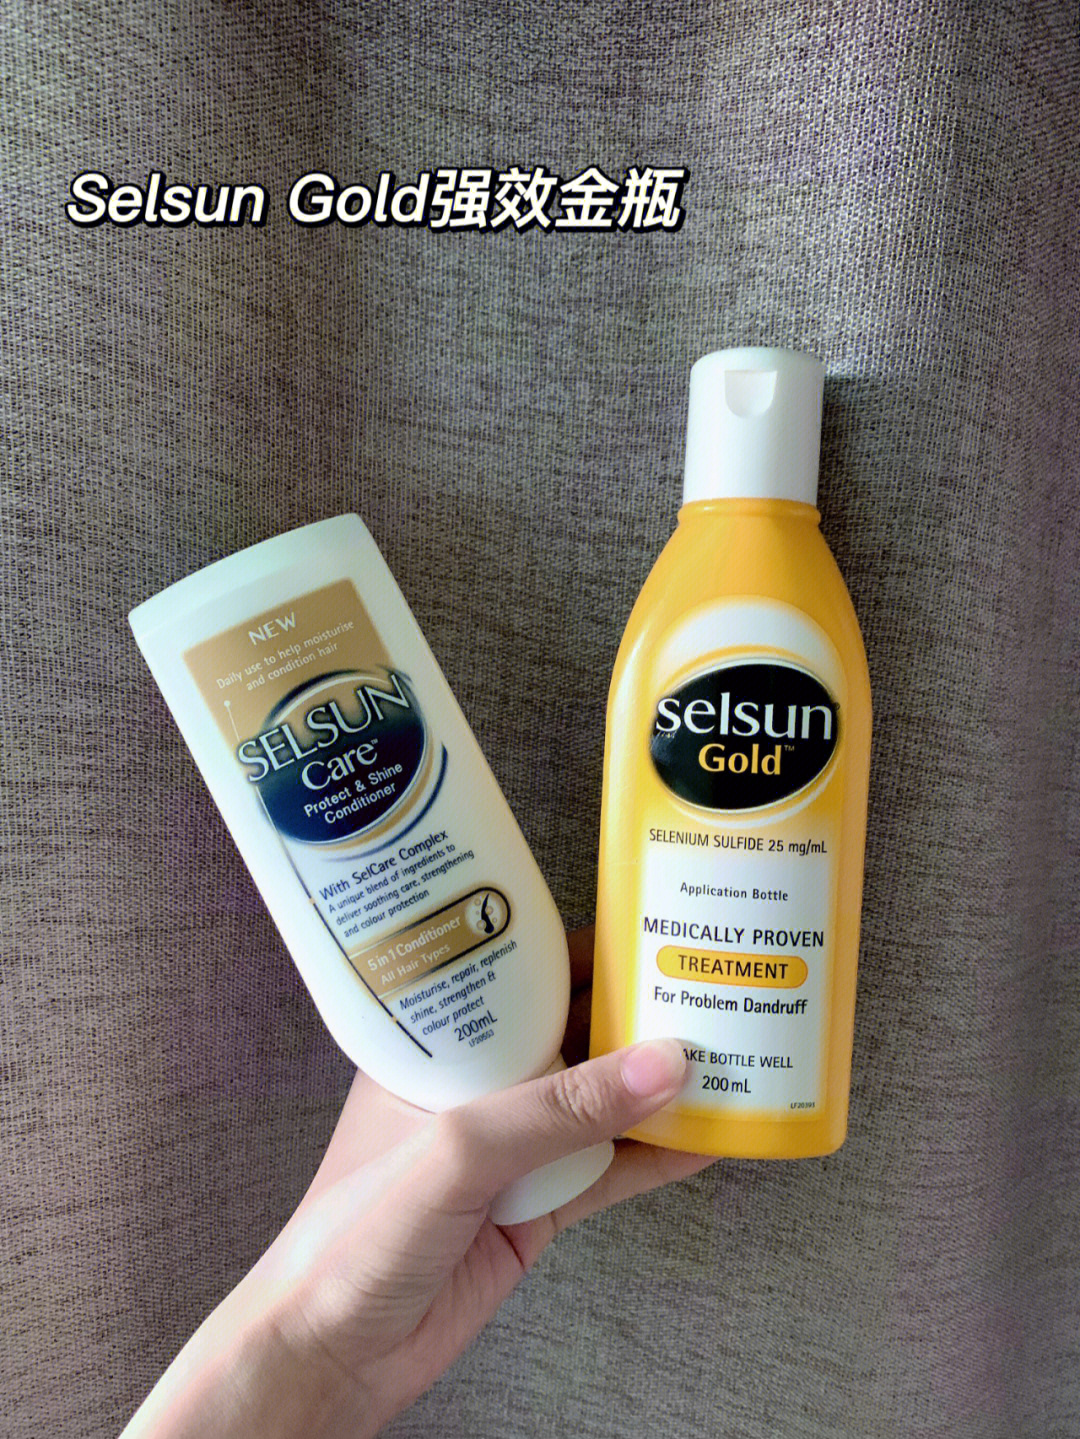 selsun洗发水配料表图片